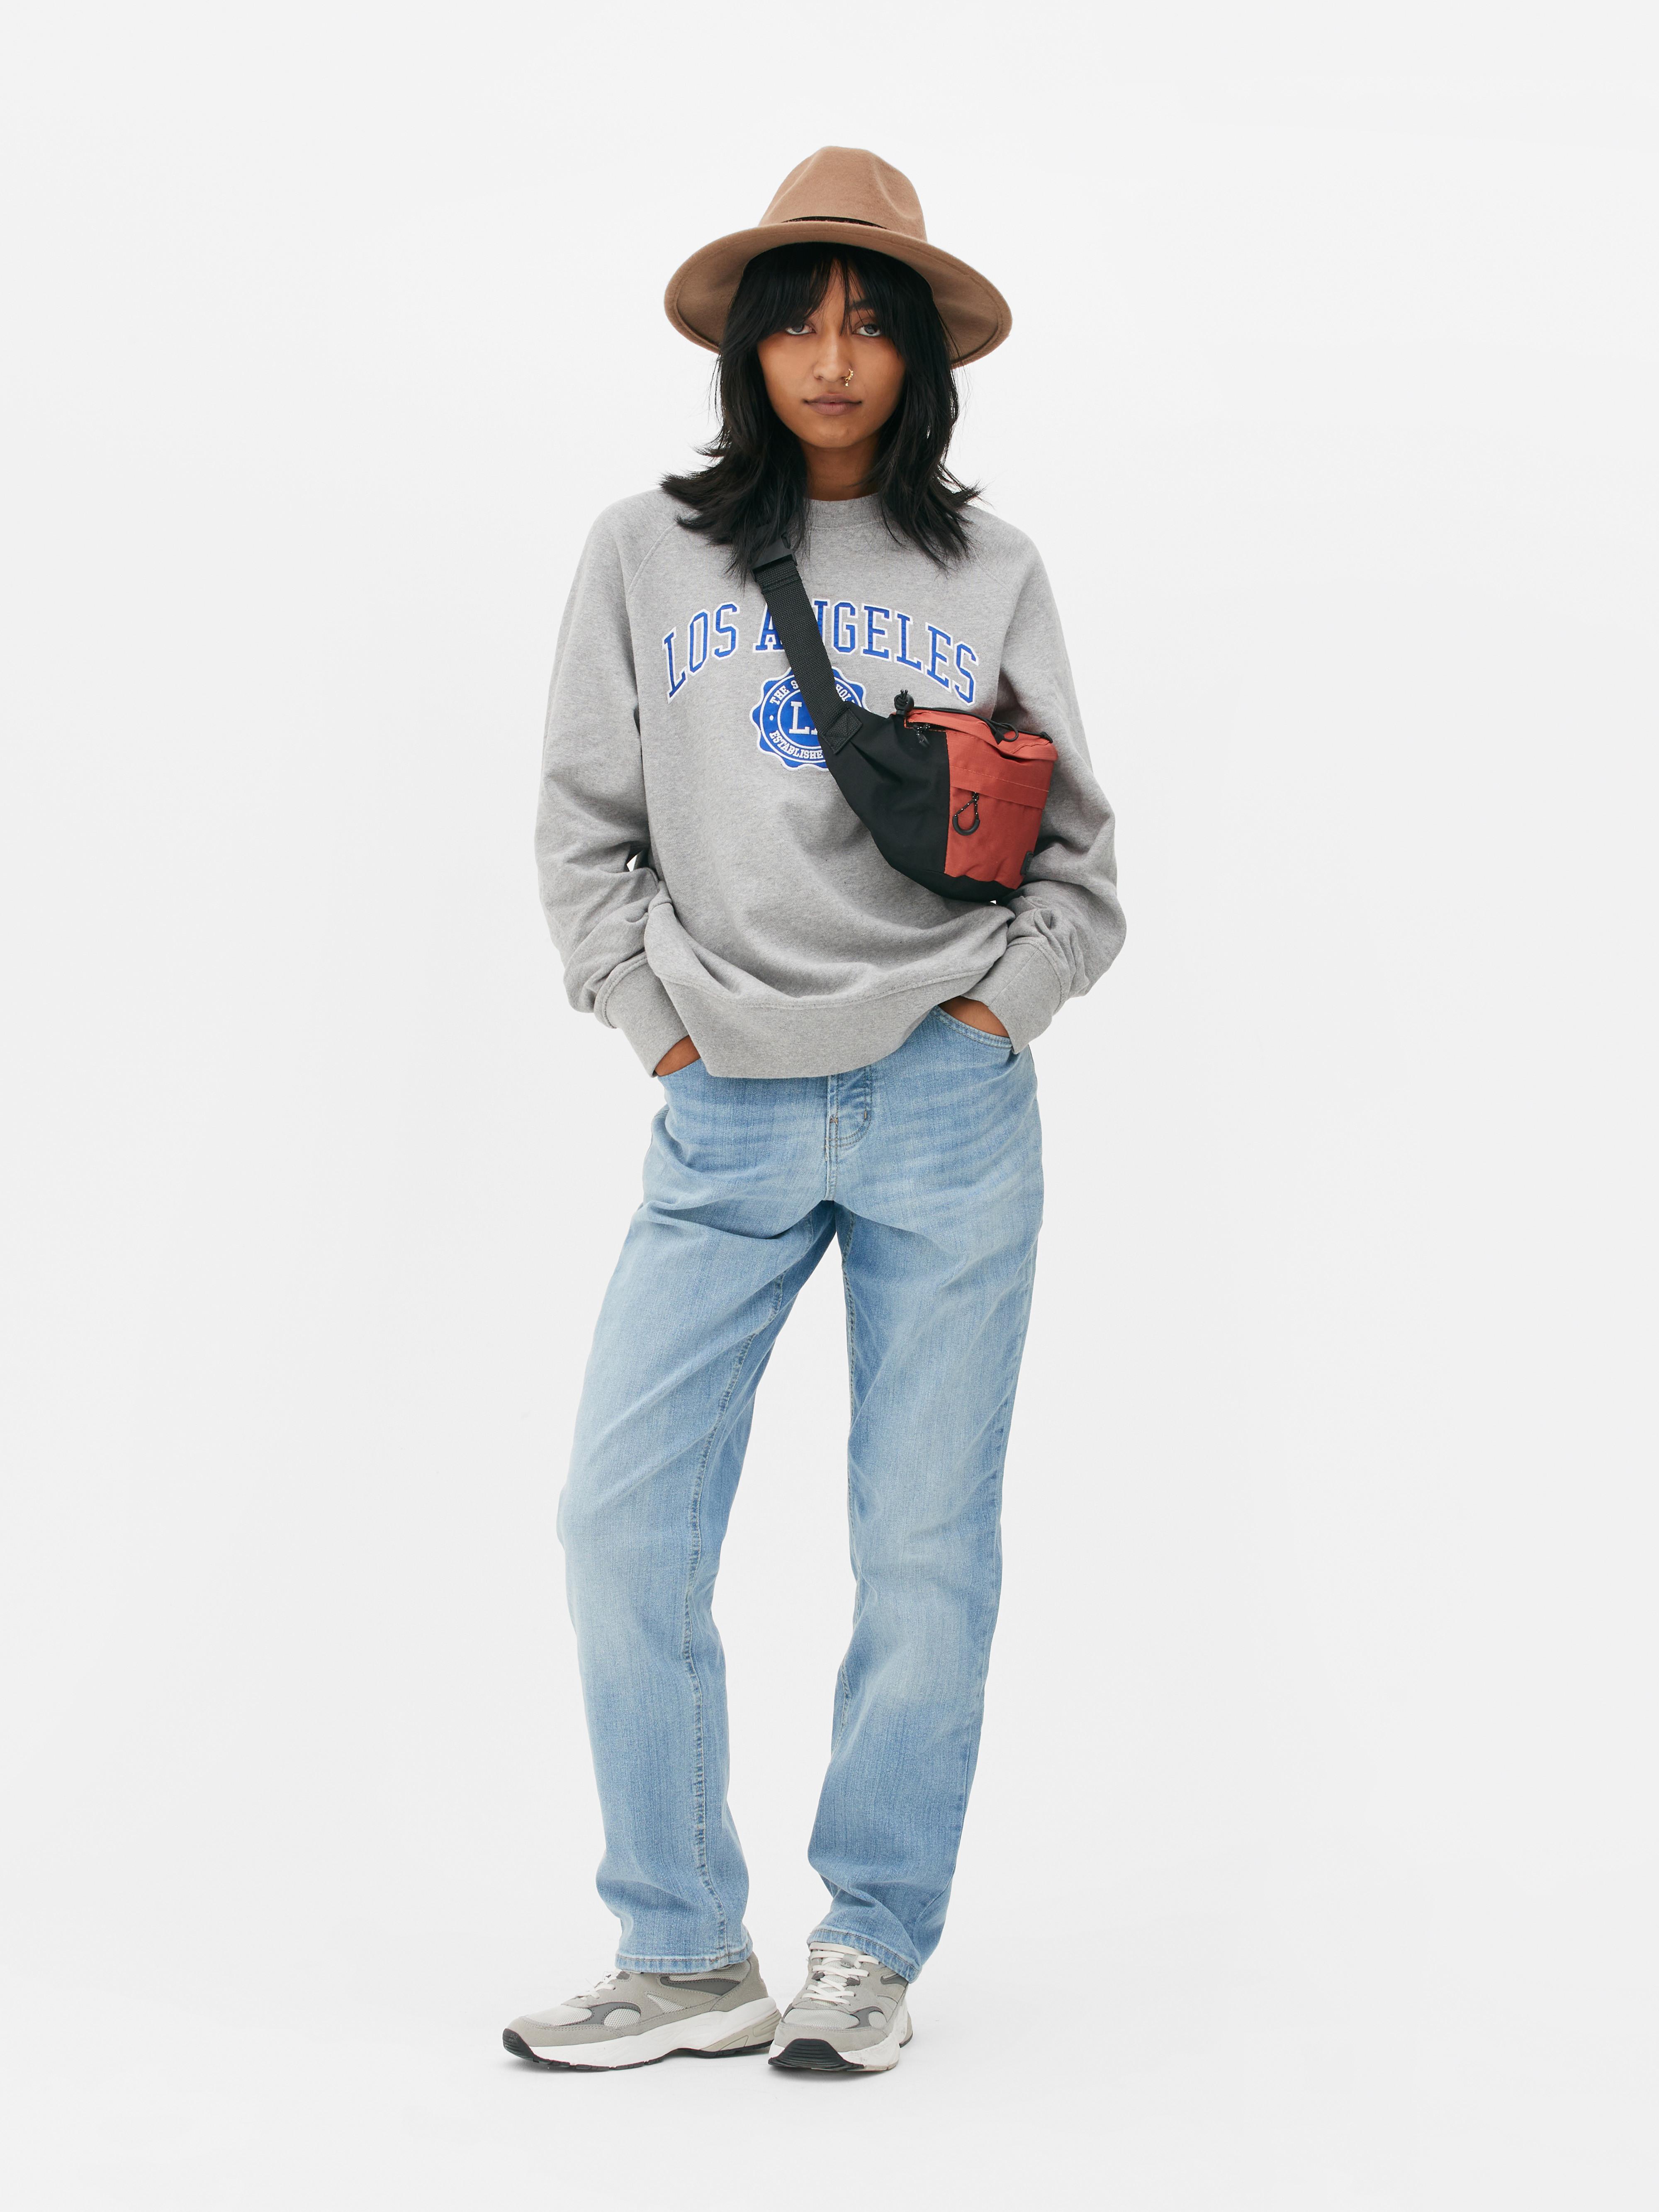 HERREN Pullovers & Sweatshirts Mit Reißverschluss Grau M Rabatt 74 % Primark sweatshirt 